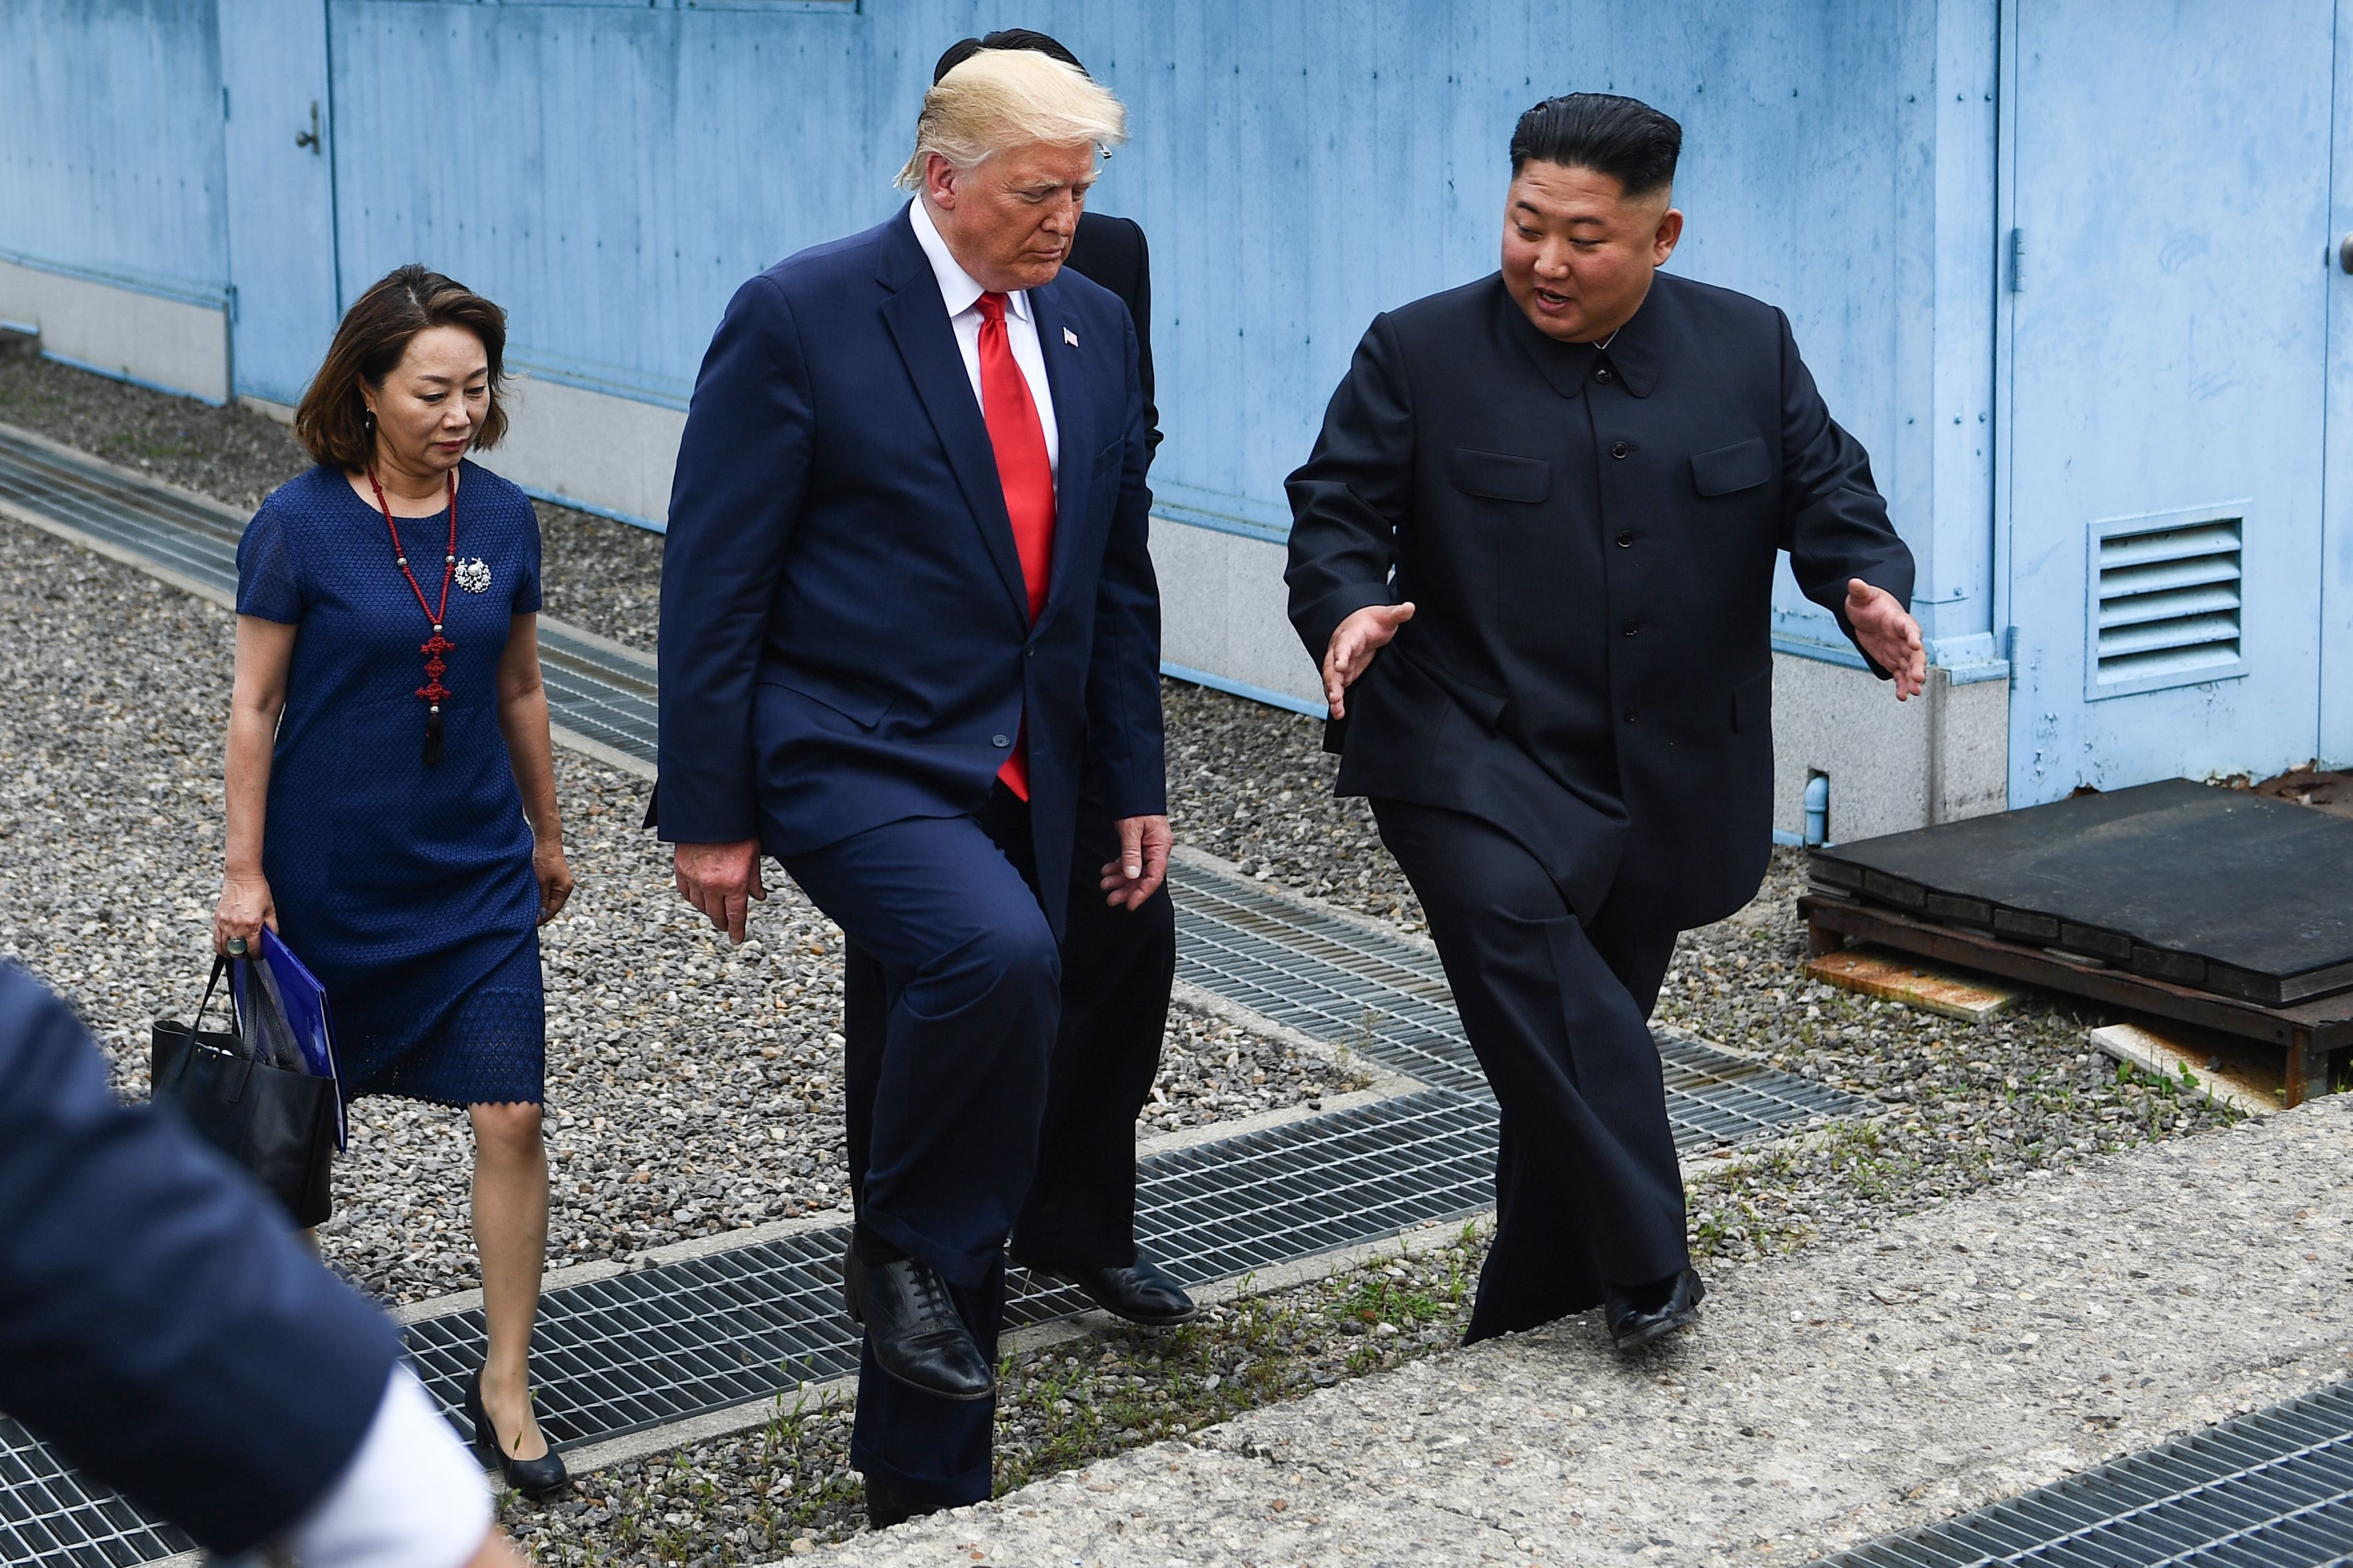 North Korea's leader Kim Jong Un and US President Donald Trump walk together at the DMZ.